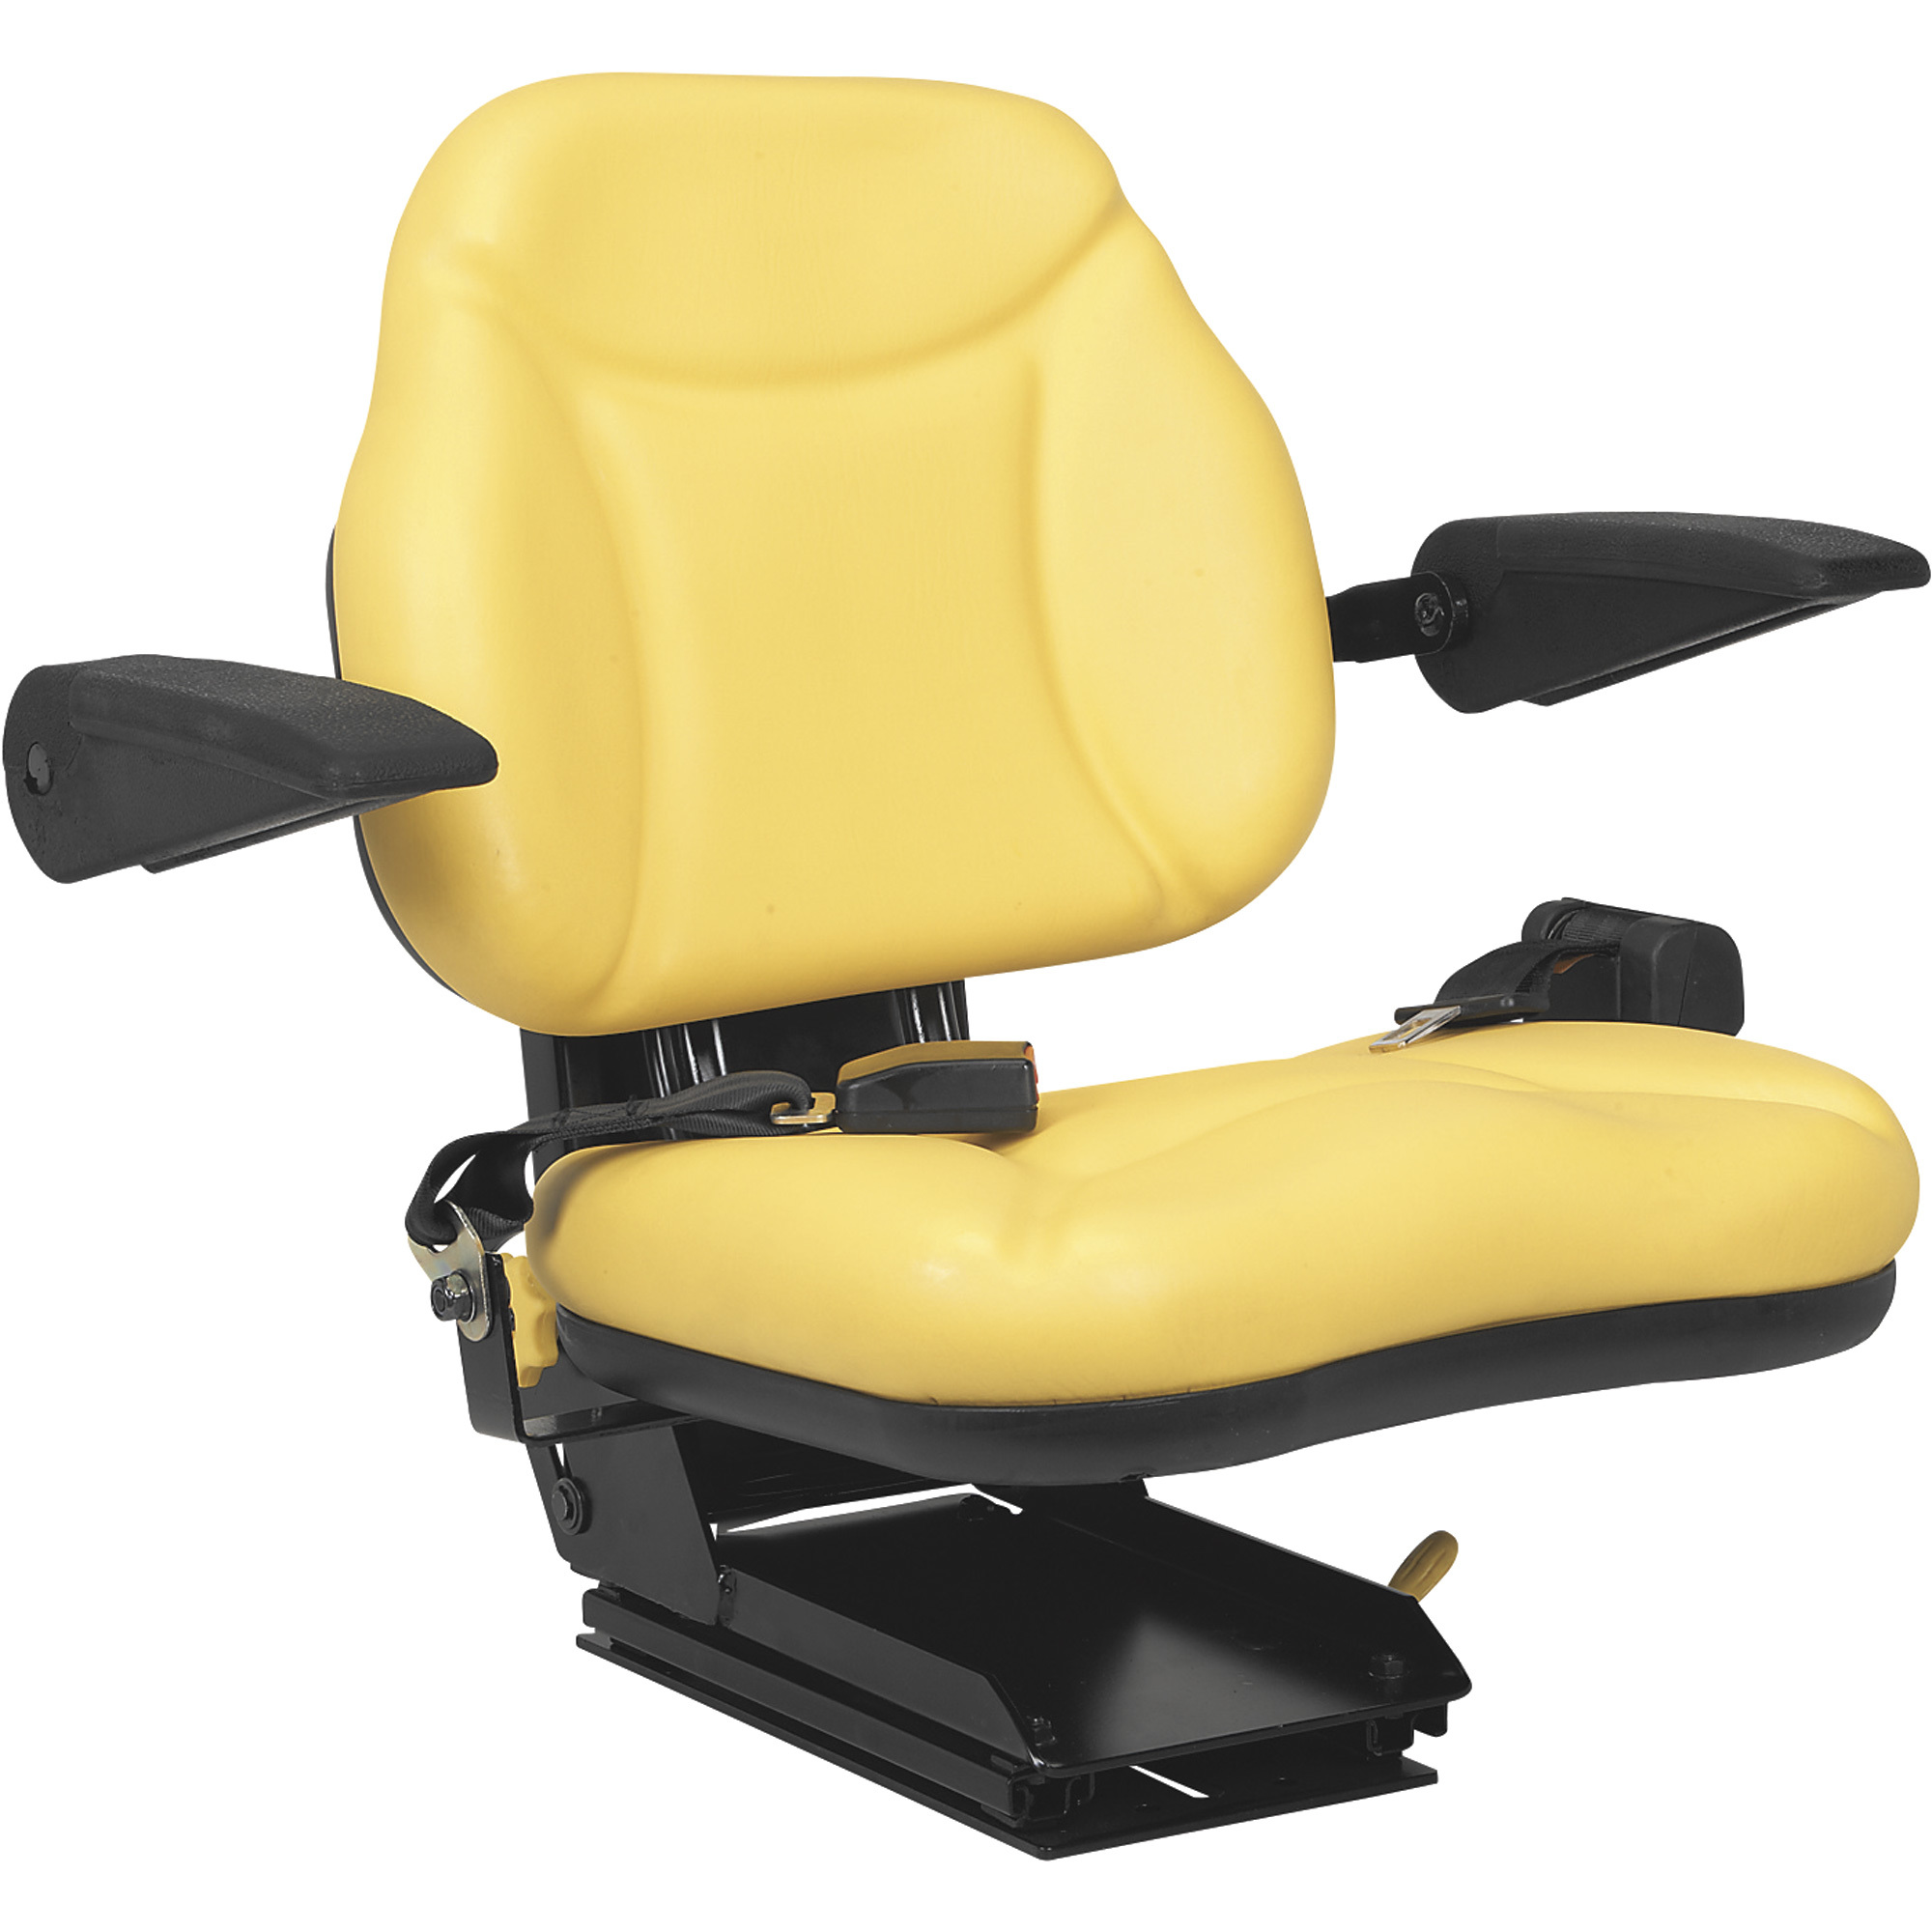 A & I Products Big Boy Suspension Tractor Seat â Yellow, Model BBS108YL